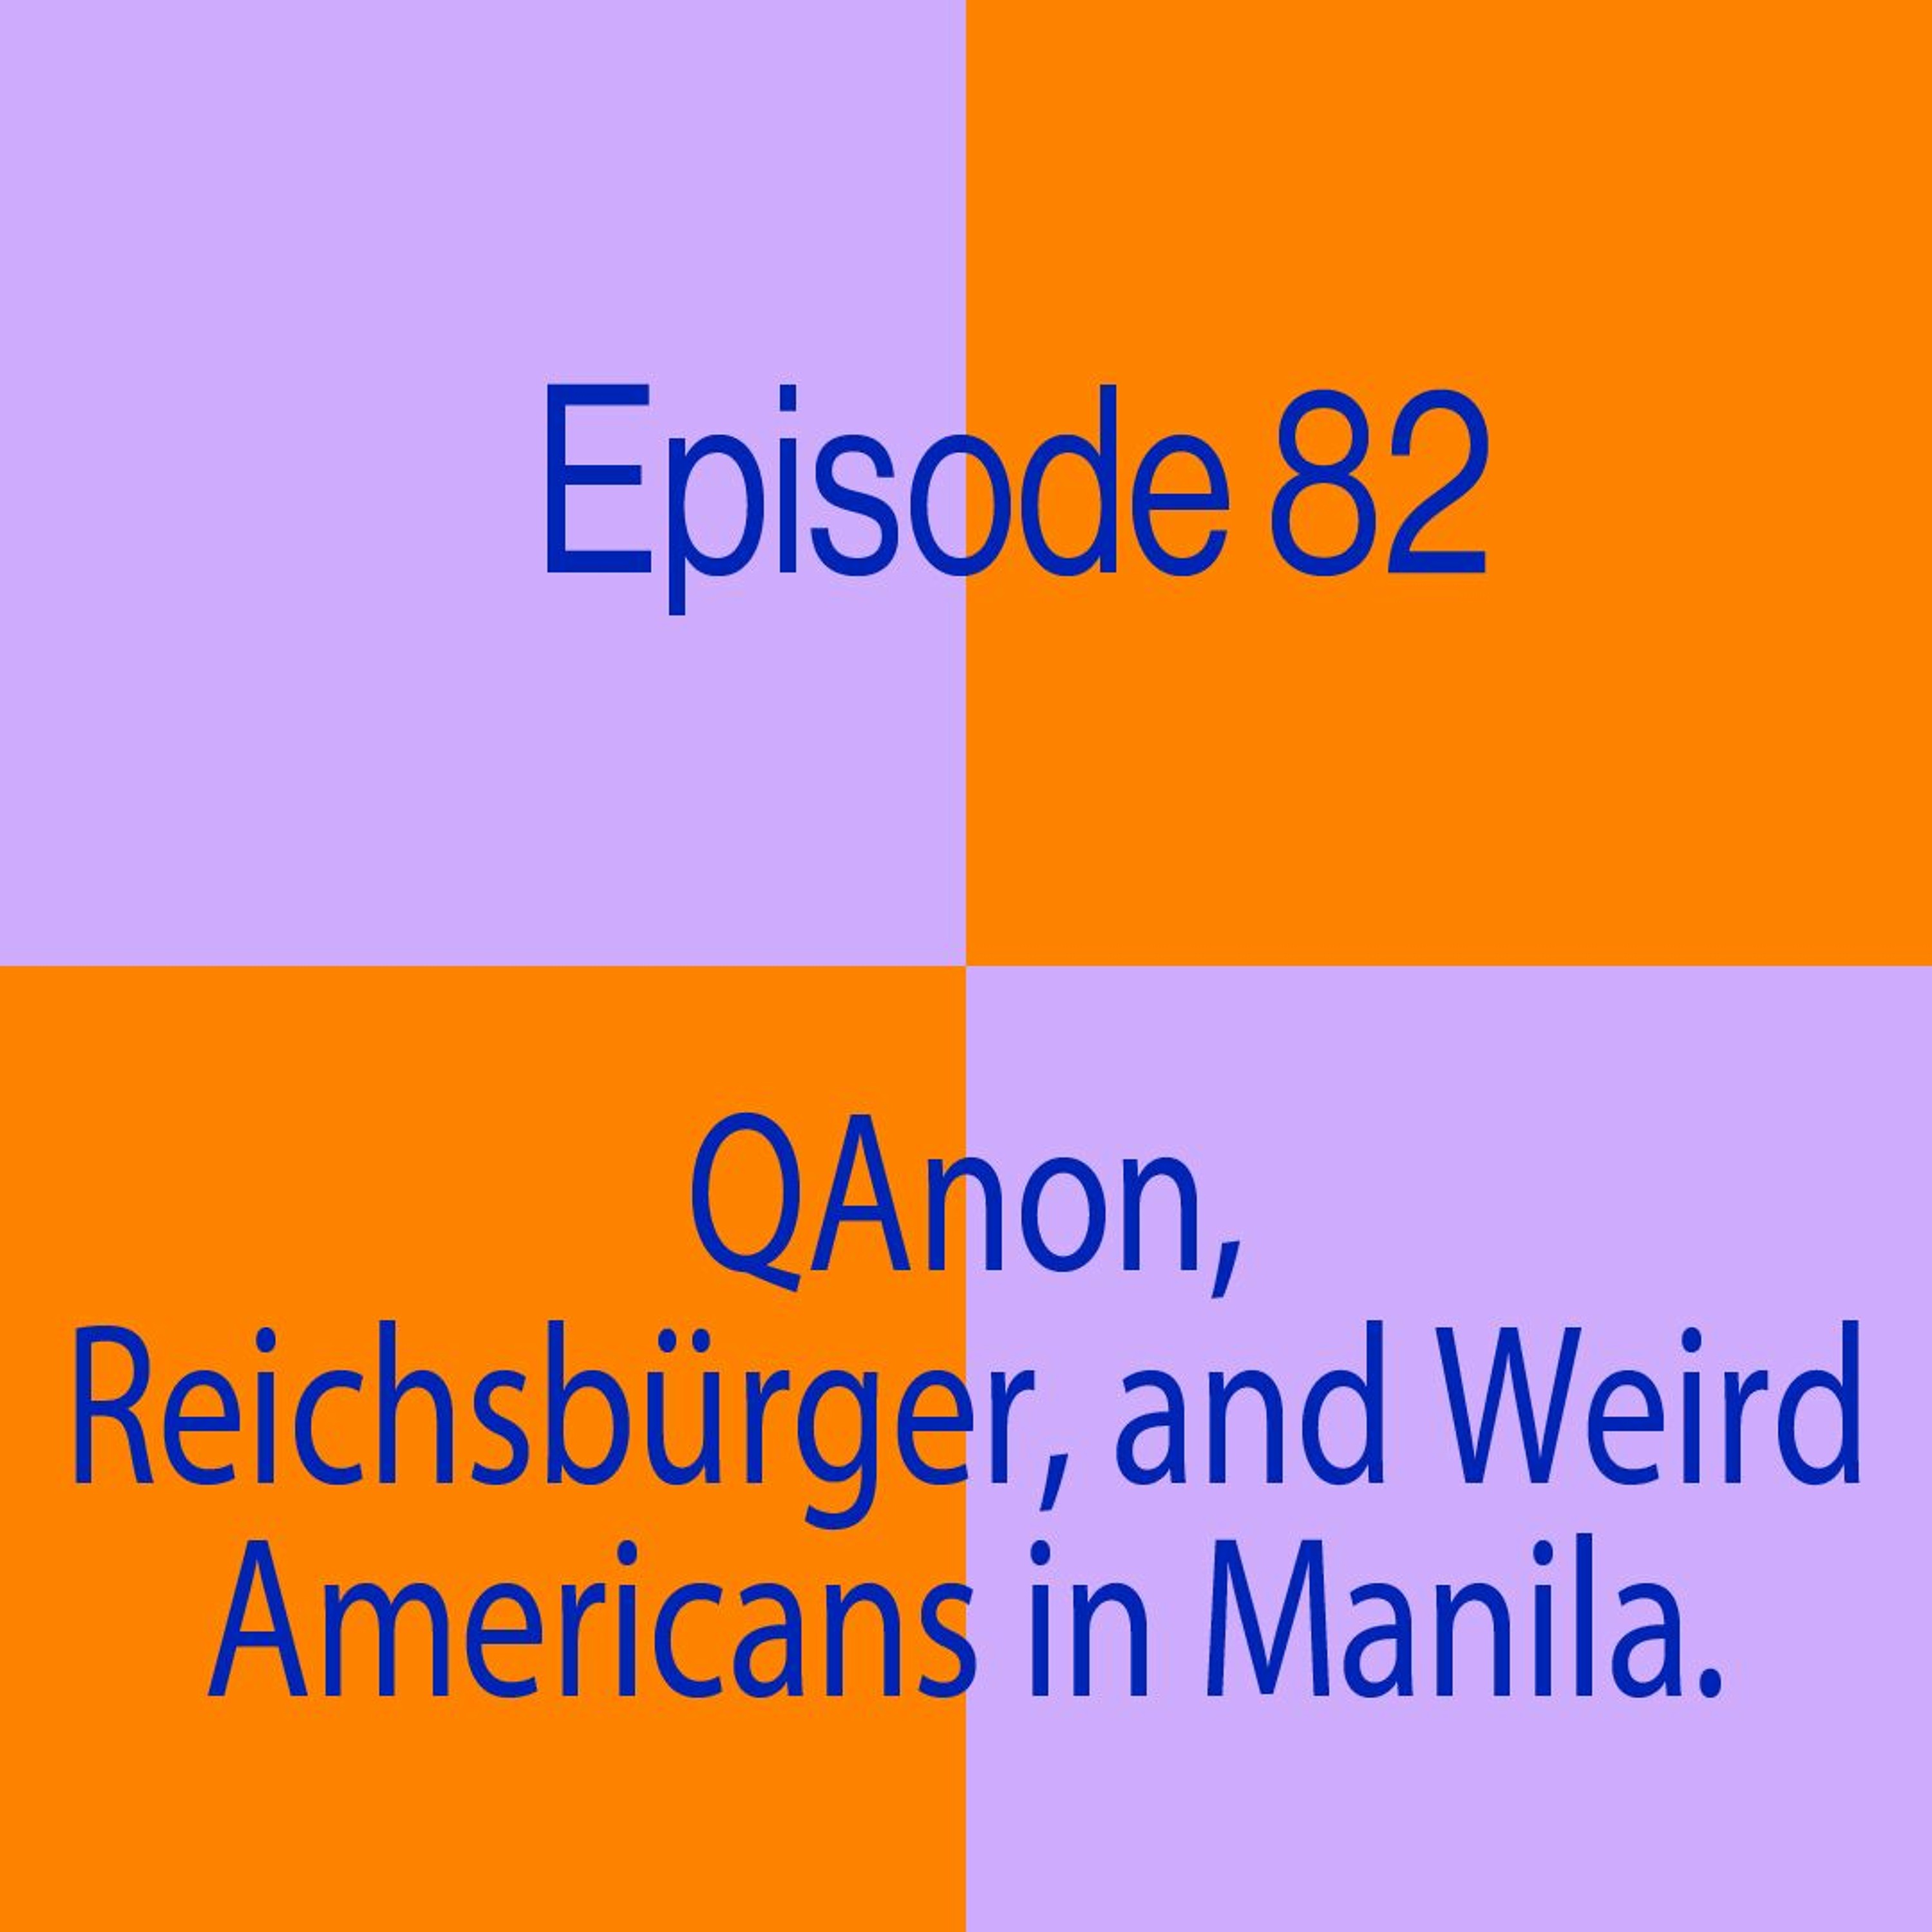 Episode 82: QAnon, Reichsbürger and Weird Americans In Manila